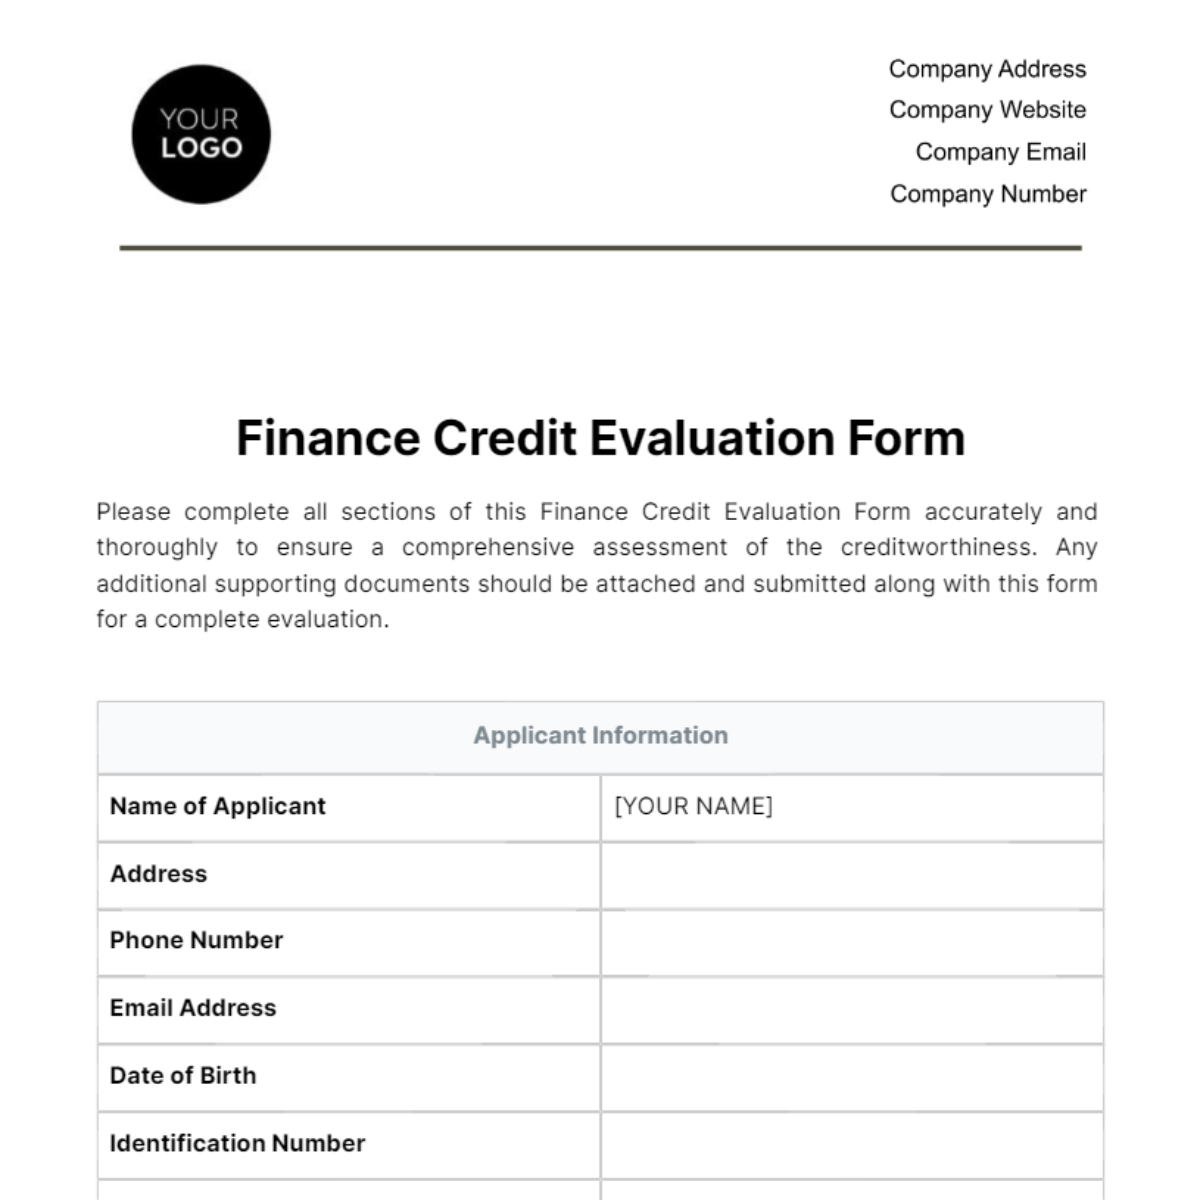 Finance Credit Evaluation Form Template